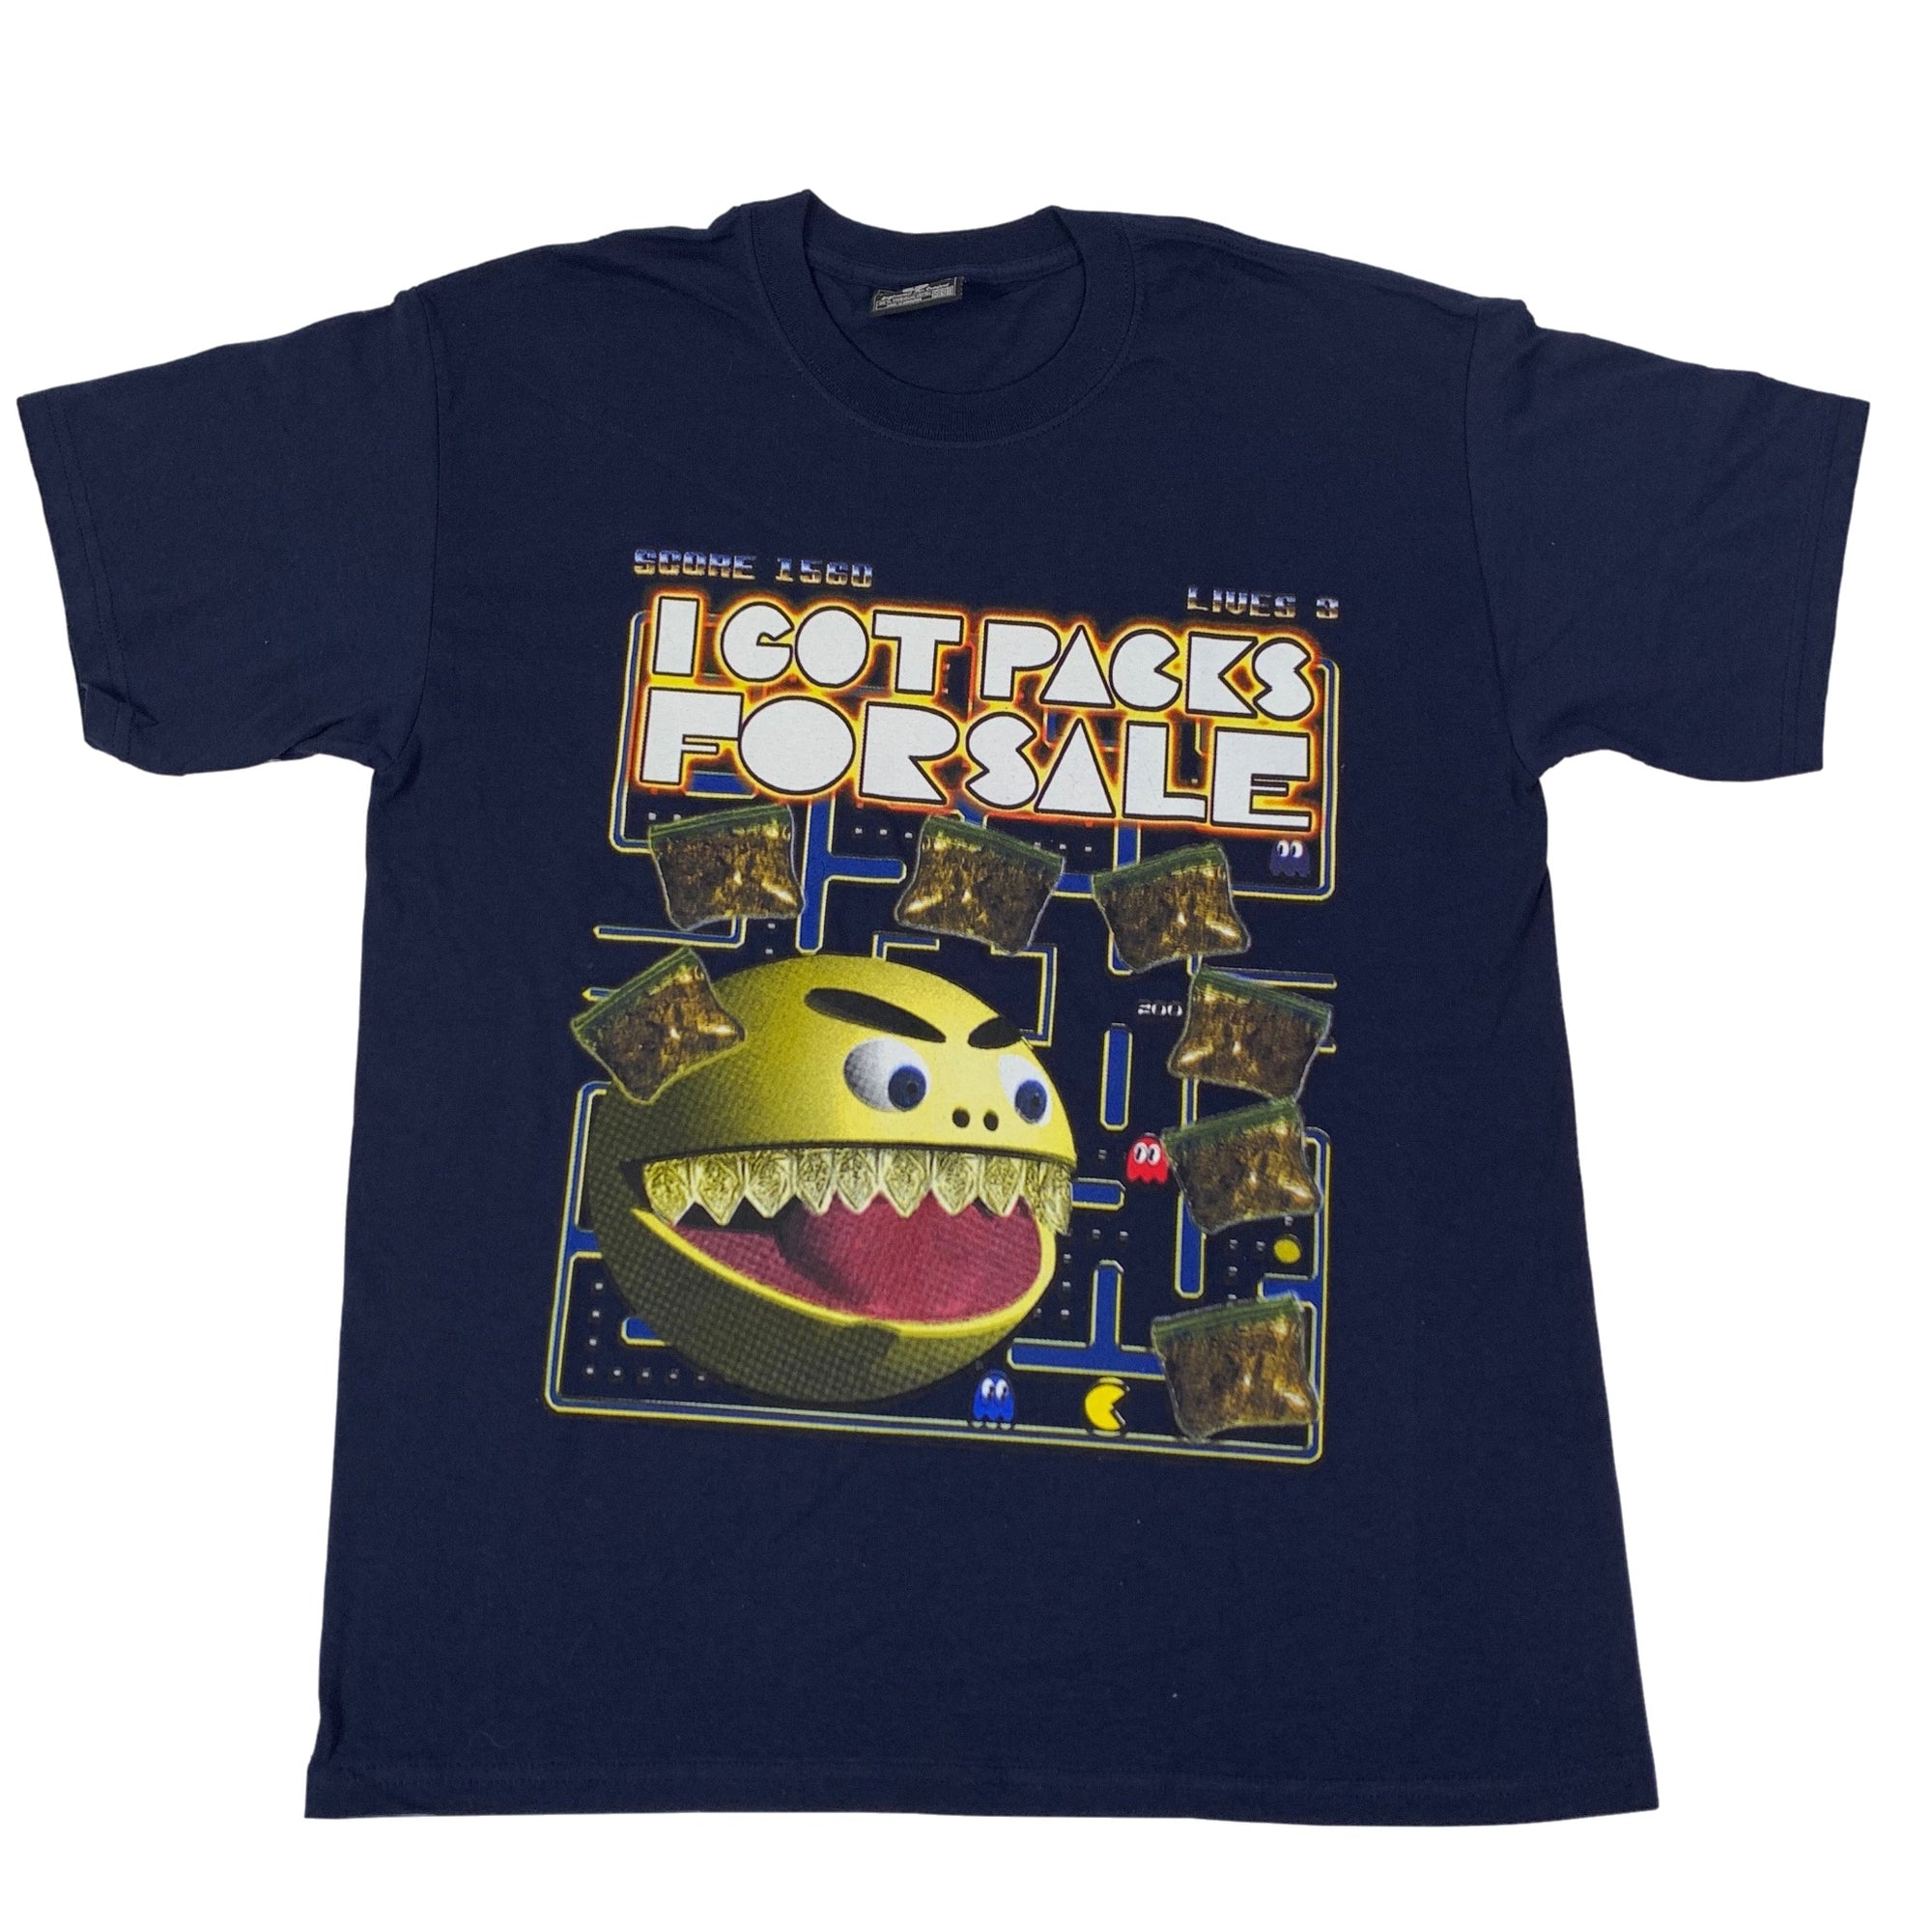 Vintage Pac-Man "I Got Packs For Sale" T-Shirt - jointcustodydc